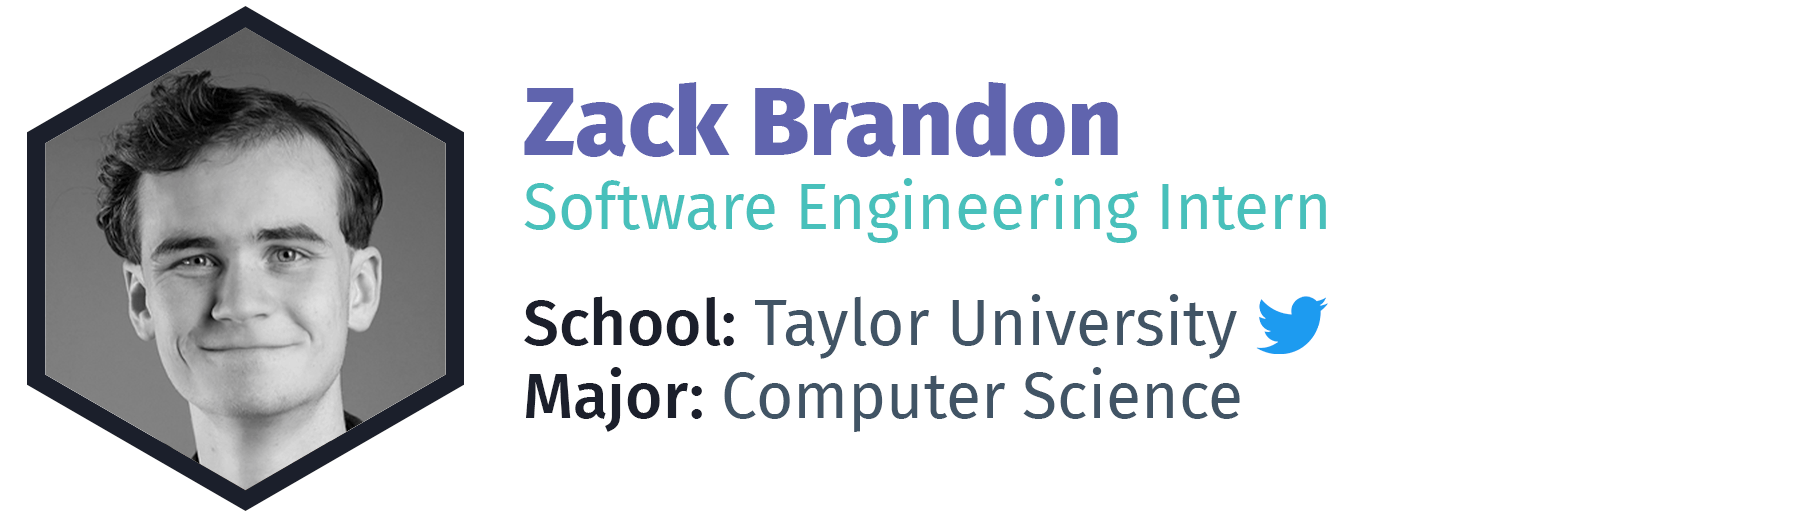 Zack Brandon - Software Engineering Intern